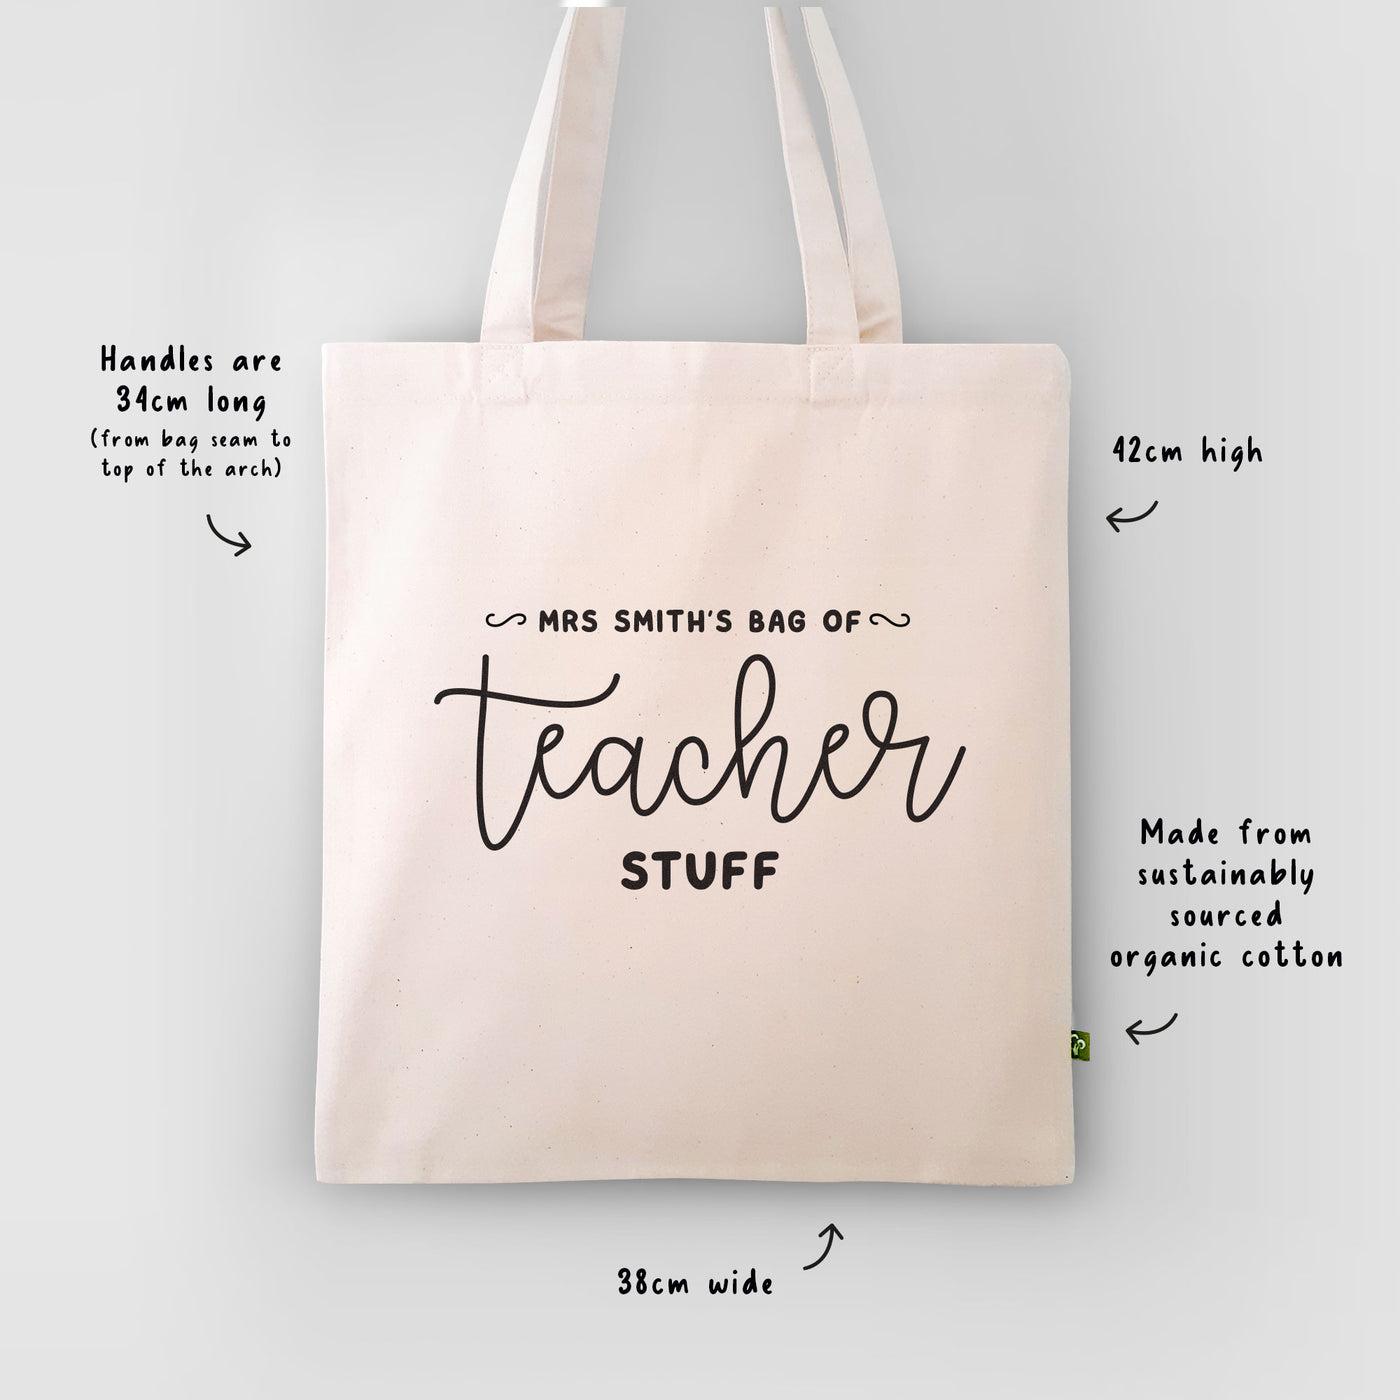 Personalised Teacher Stuff Cotton Tote Bag